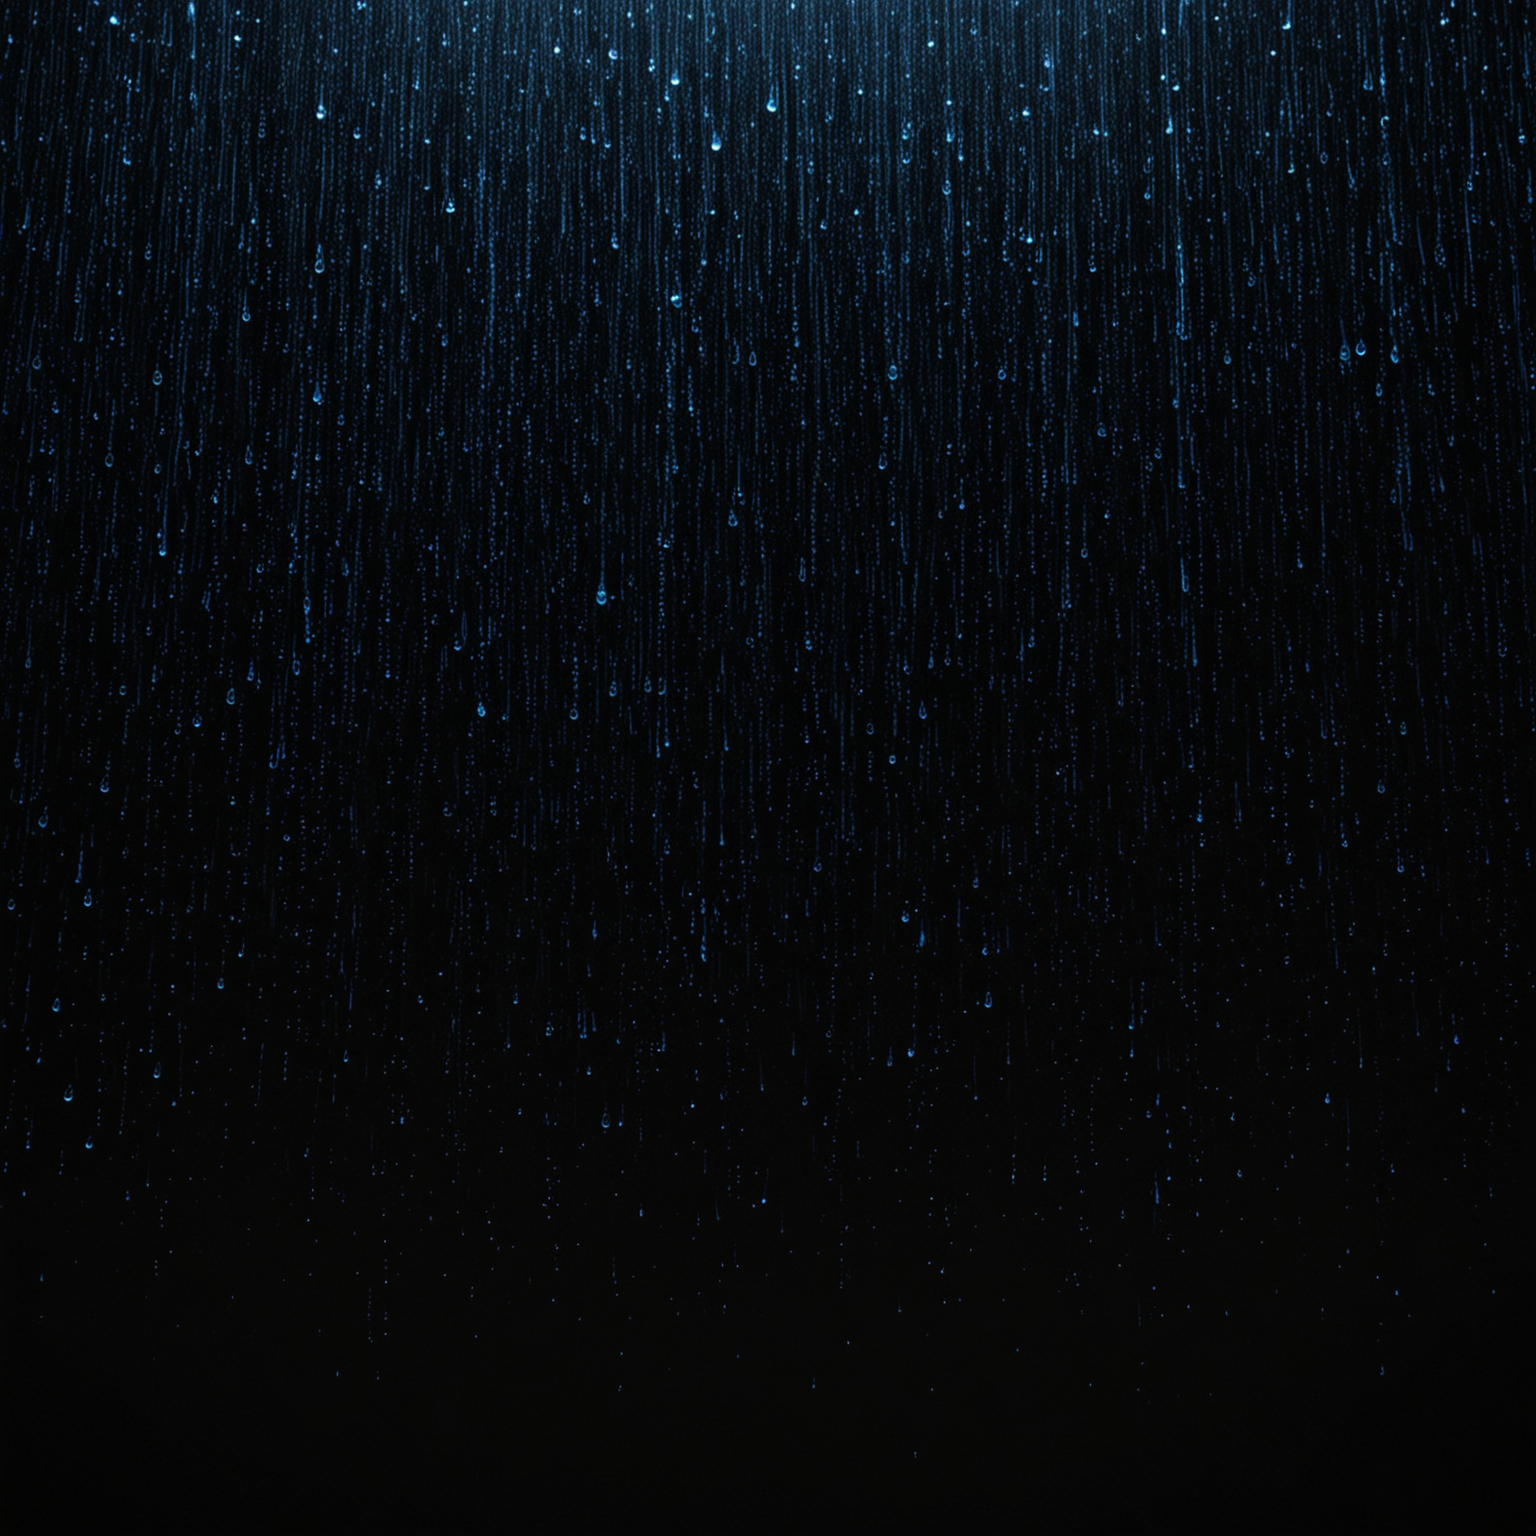 blue rain falling against a black background